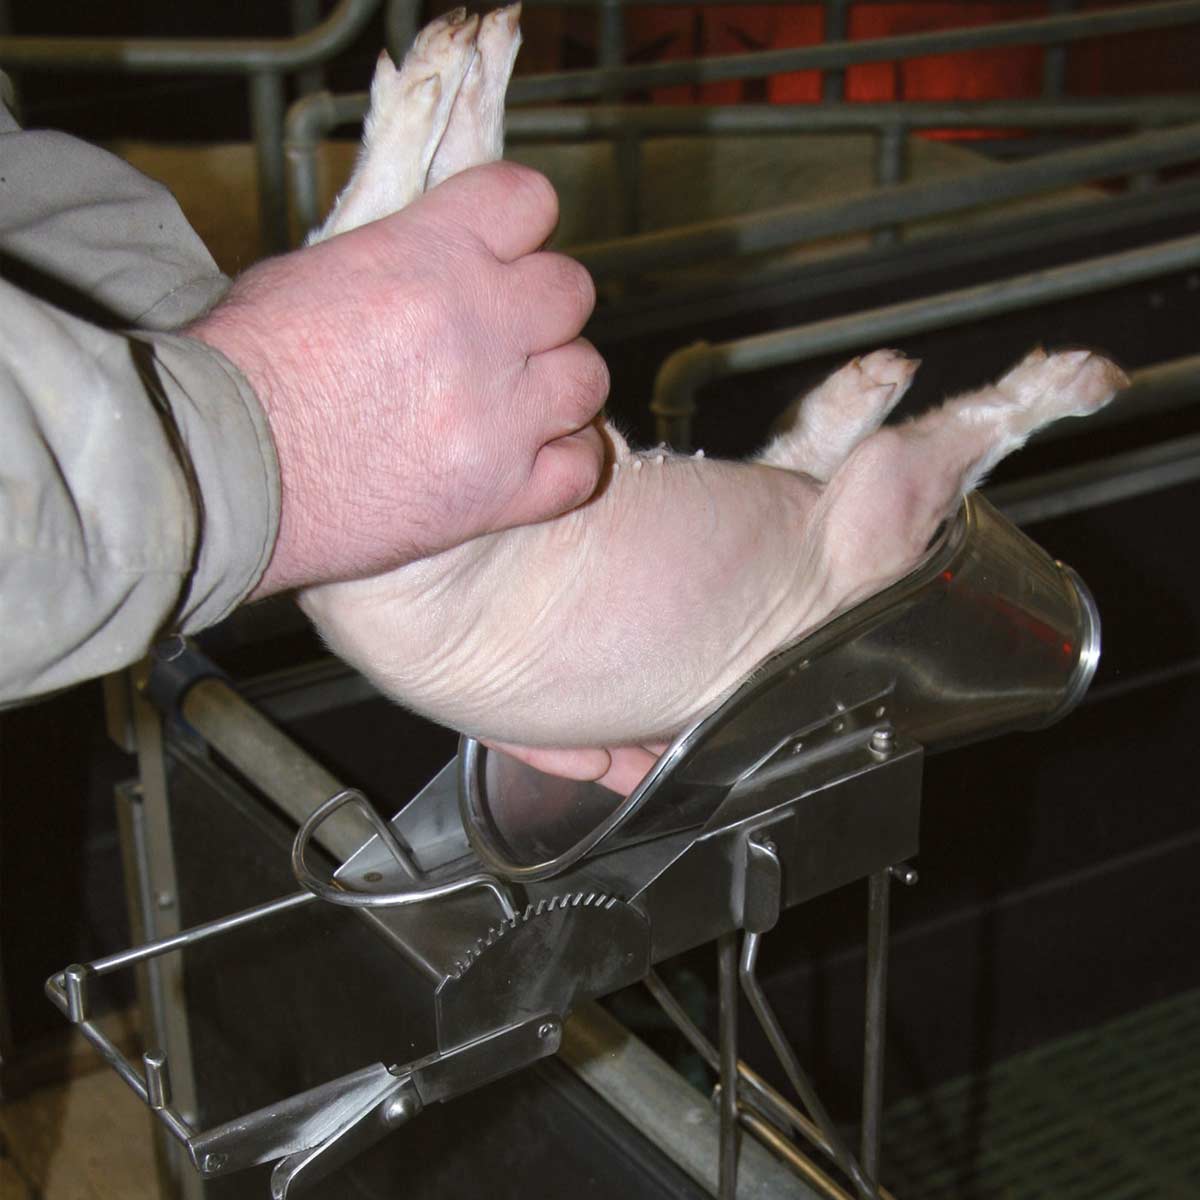 Castration device for piglets 2-9 days